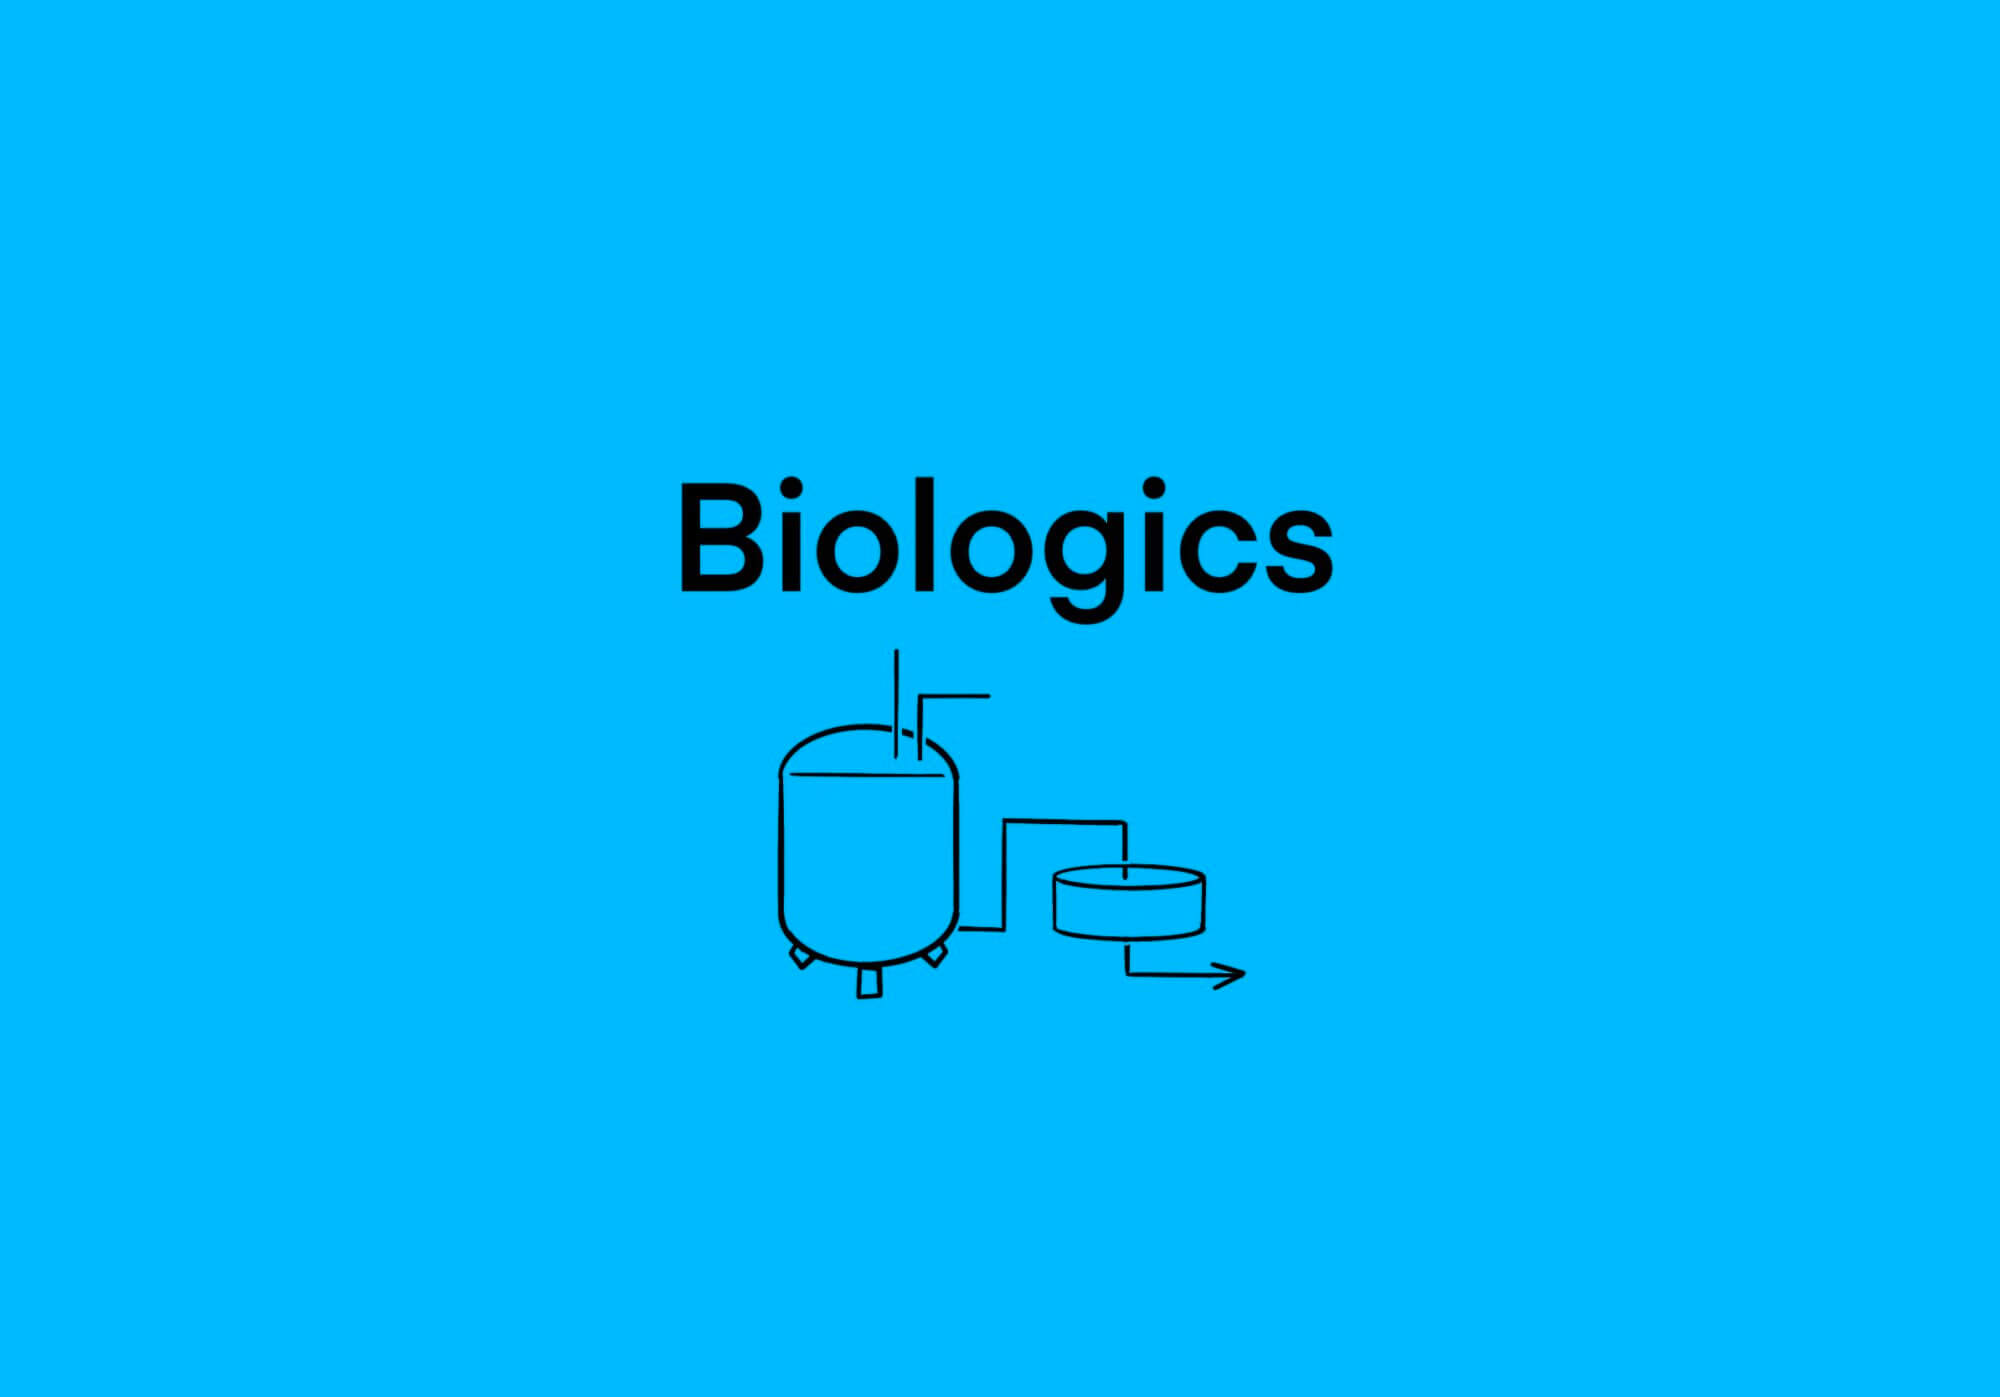 [Bio-Edu] 遺伝子組換え大腸菌からタンパク質を精製する製造フロー概略 – ID6624 [2020/01/09] ID6624